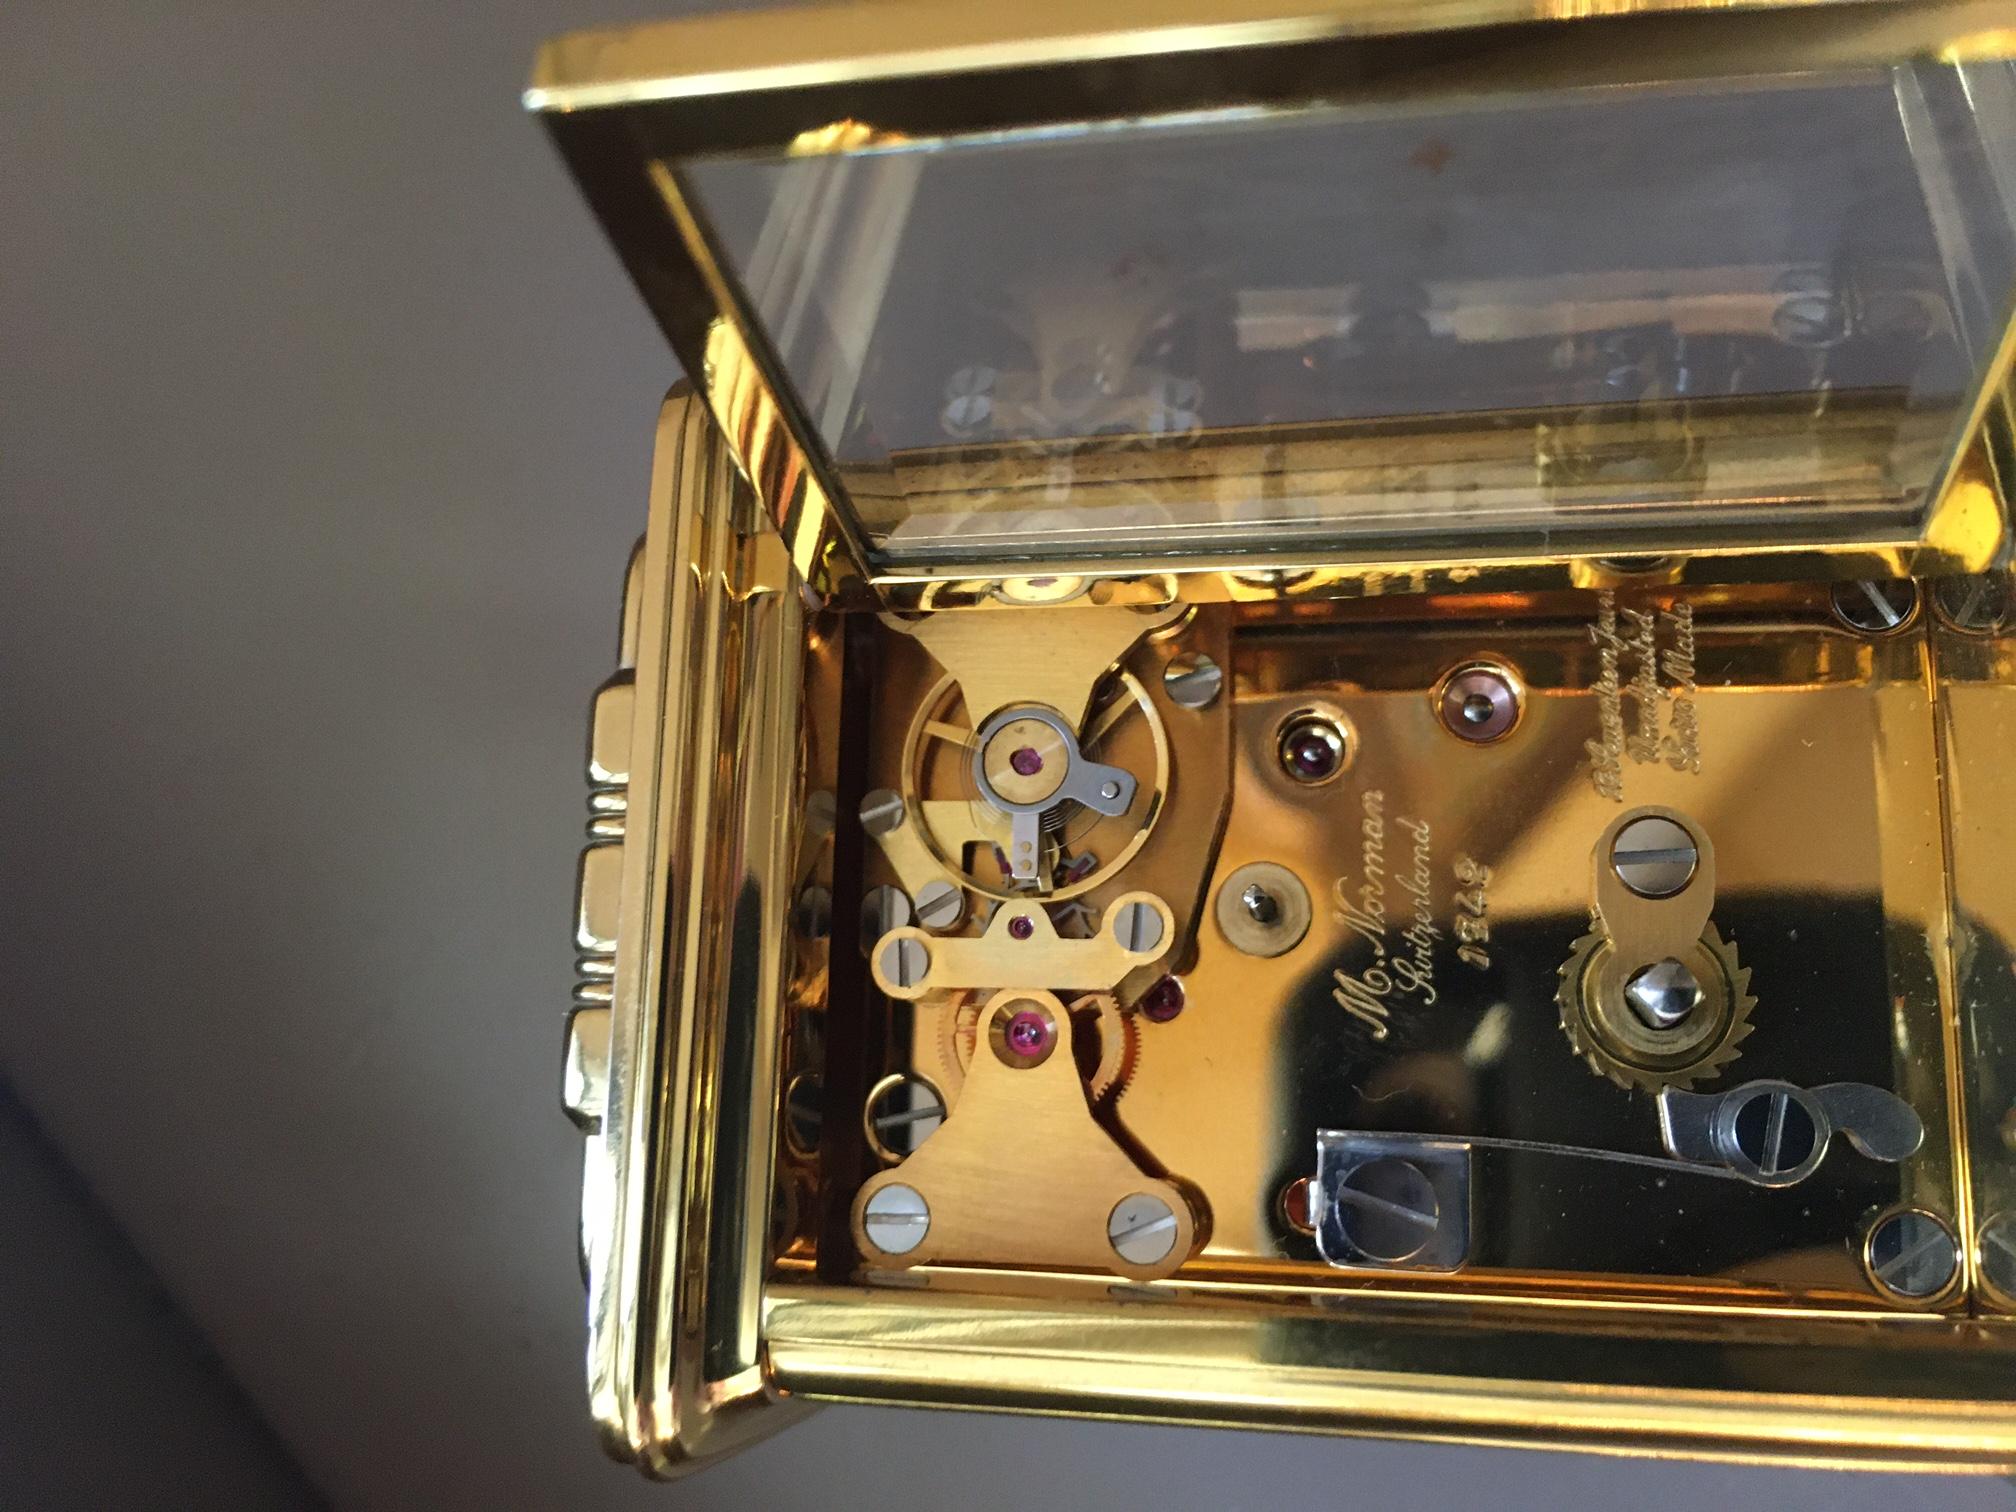 Miniature Carriage Clock by Mathew Norman of Switzerland w/ Original Key For Sale 1